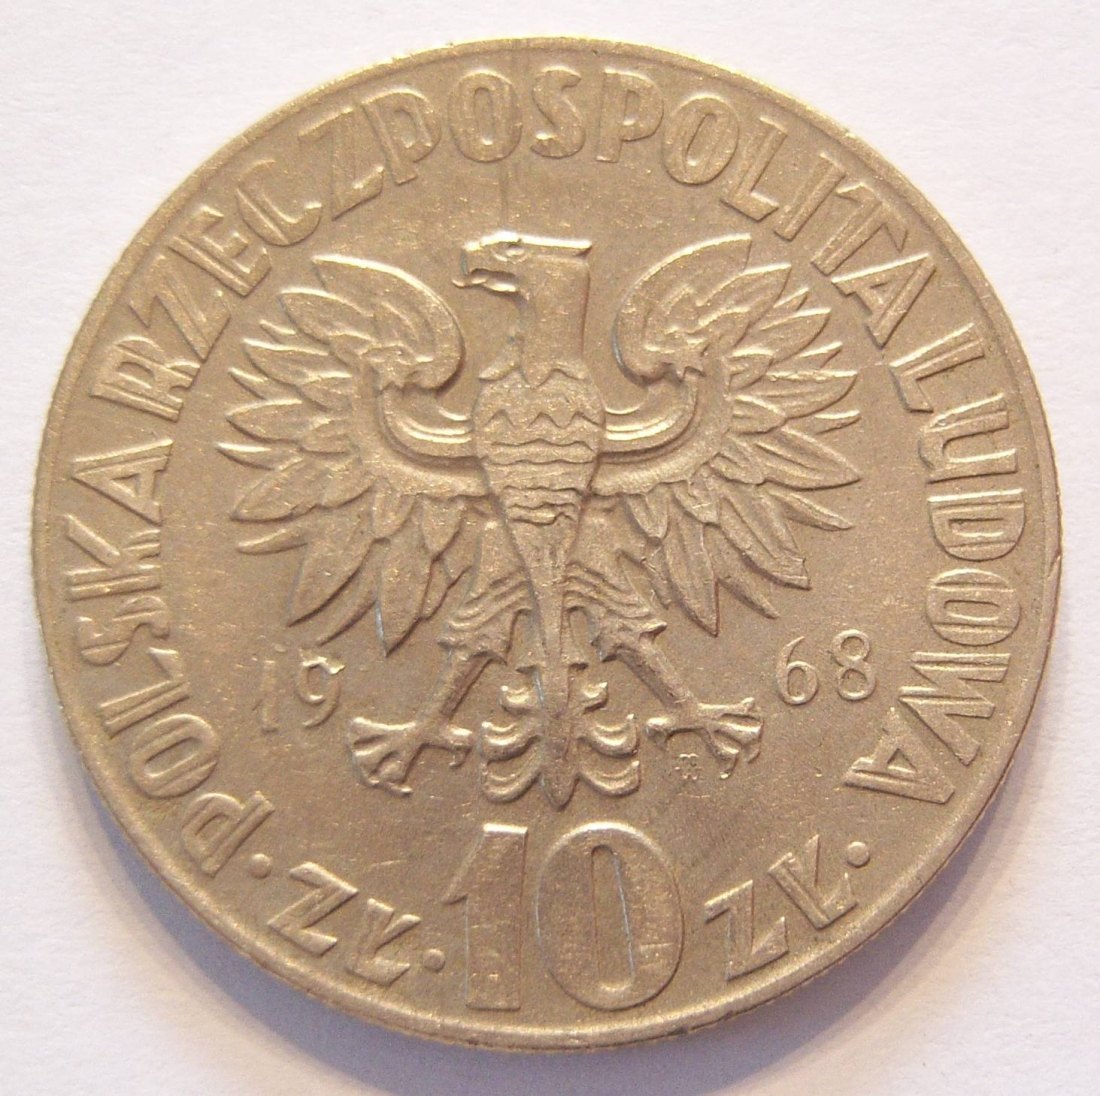  Polen 10 Zlotych 1968   